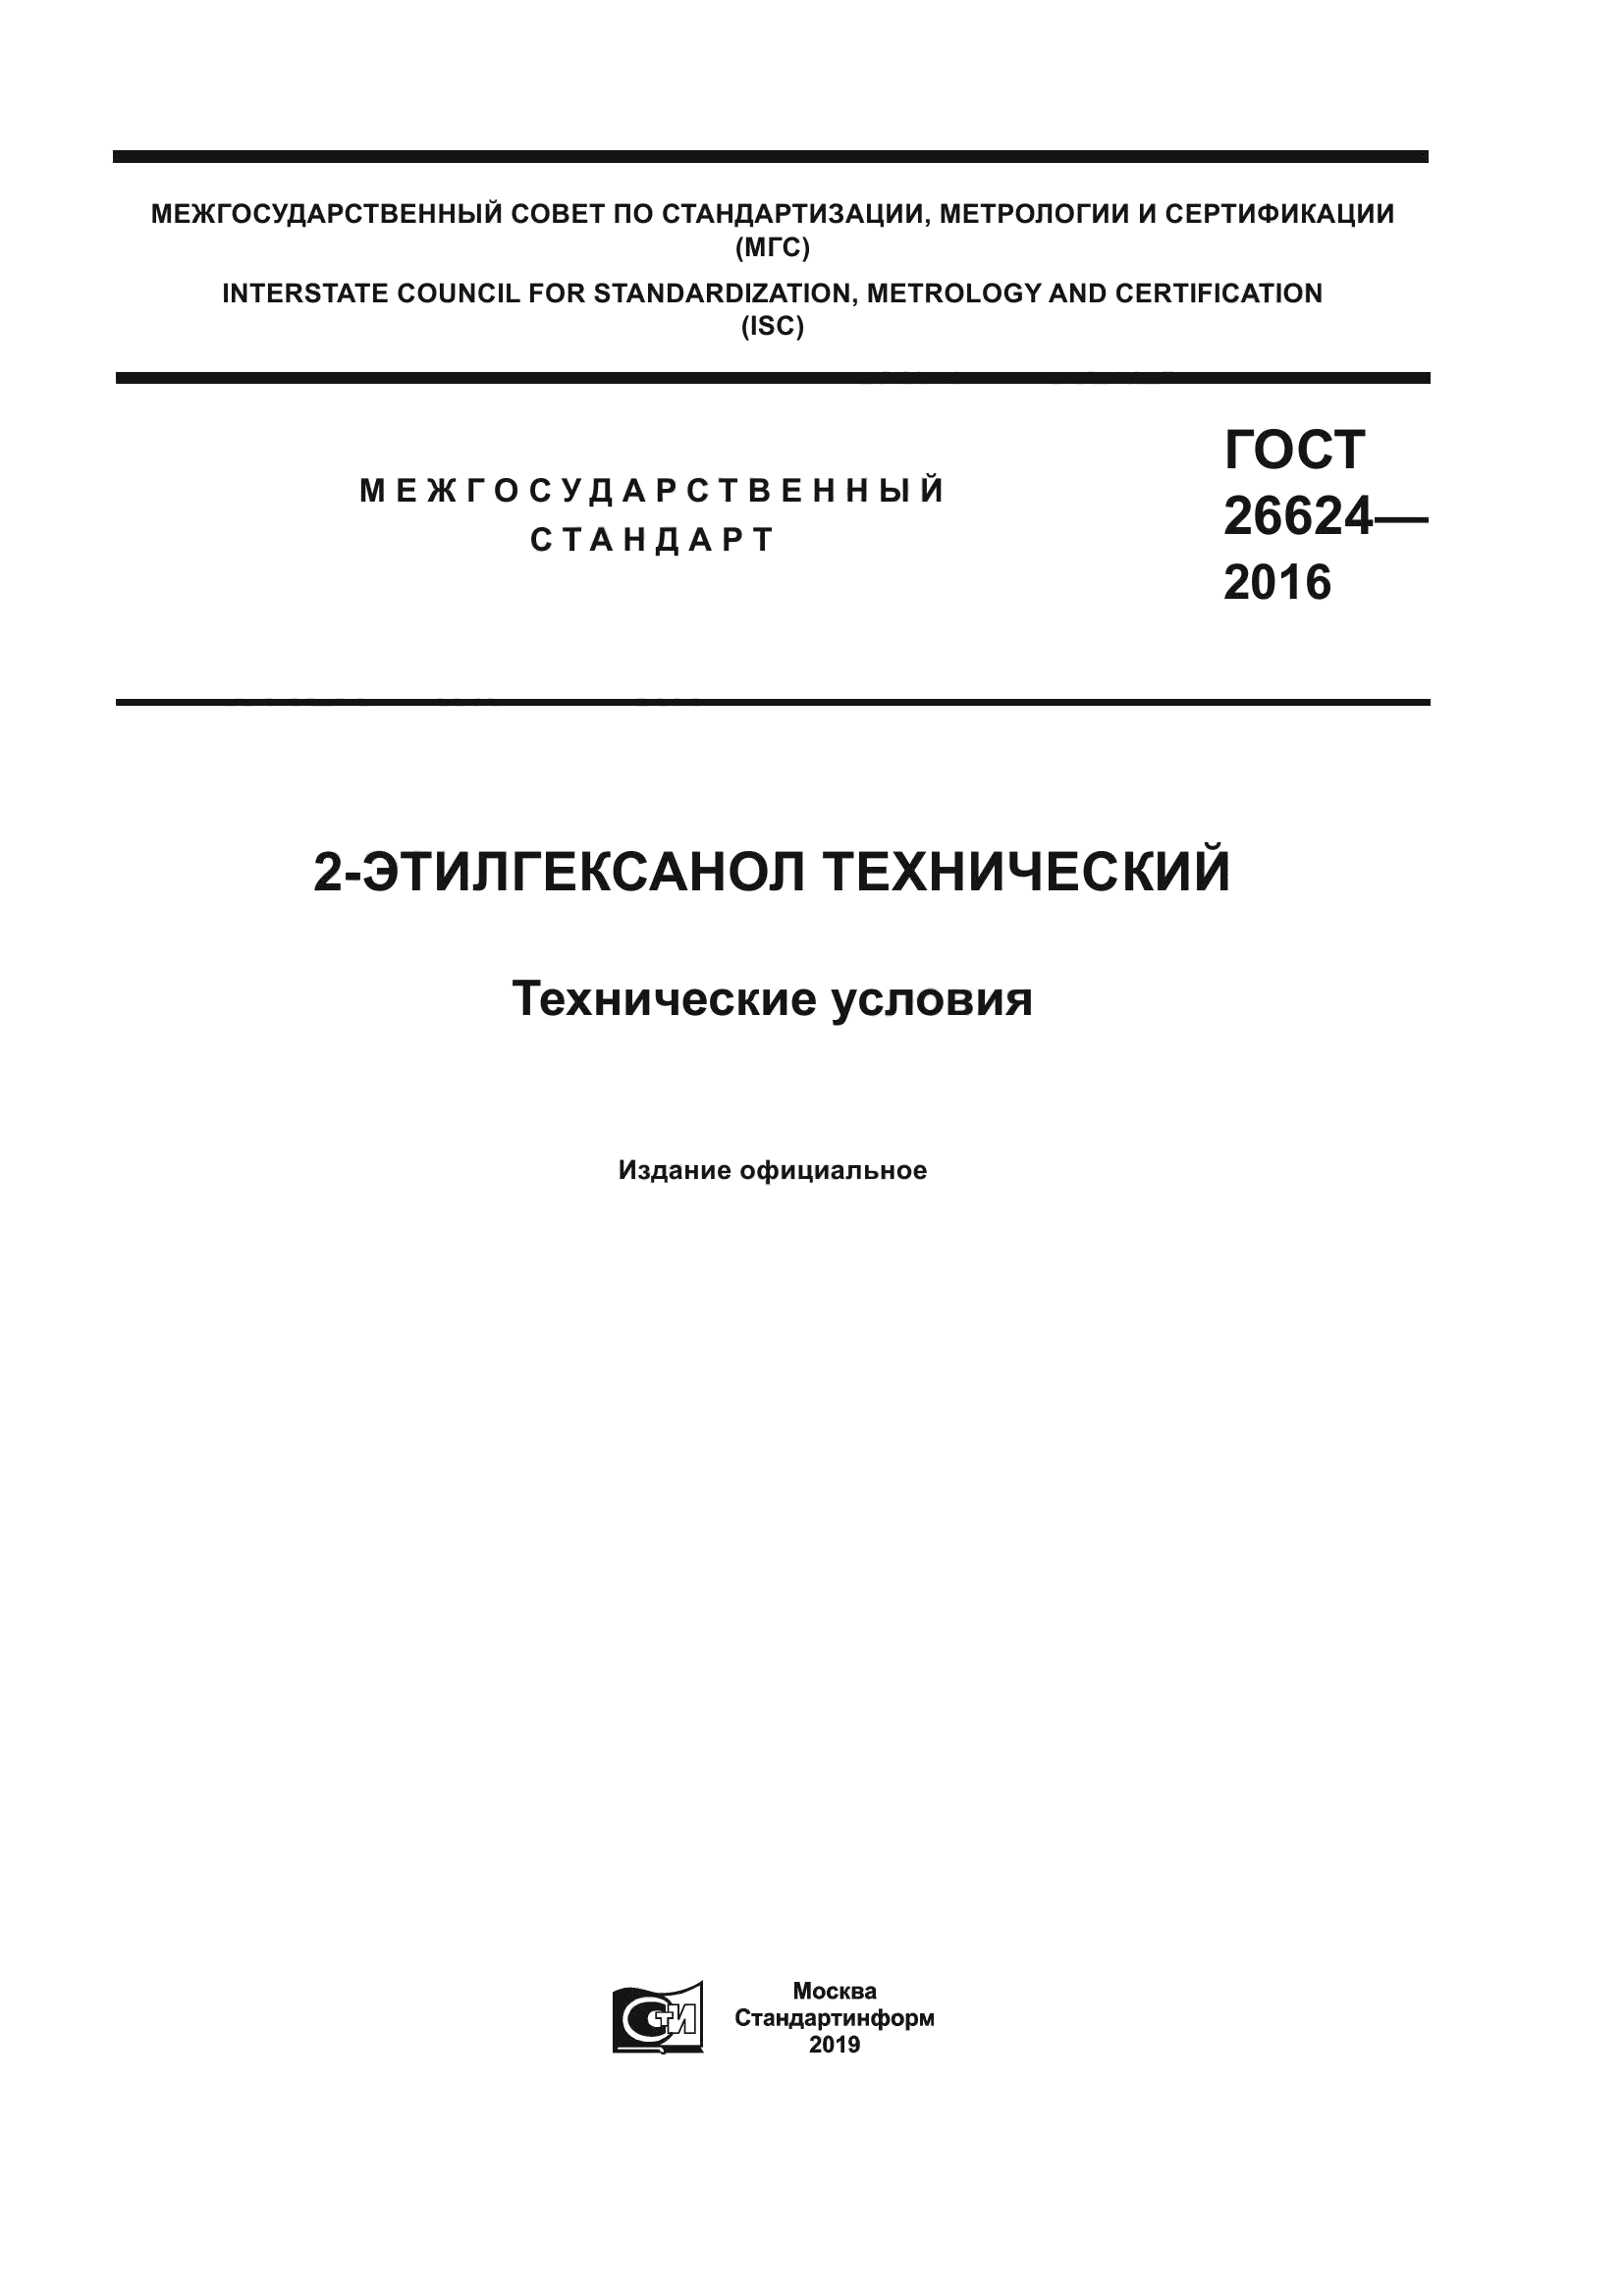 ГОСТ 26624-2016